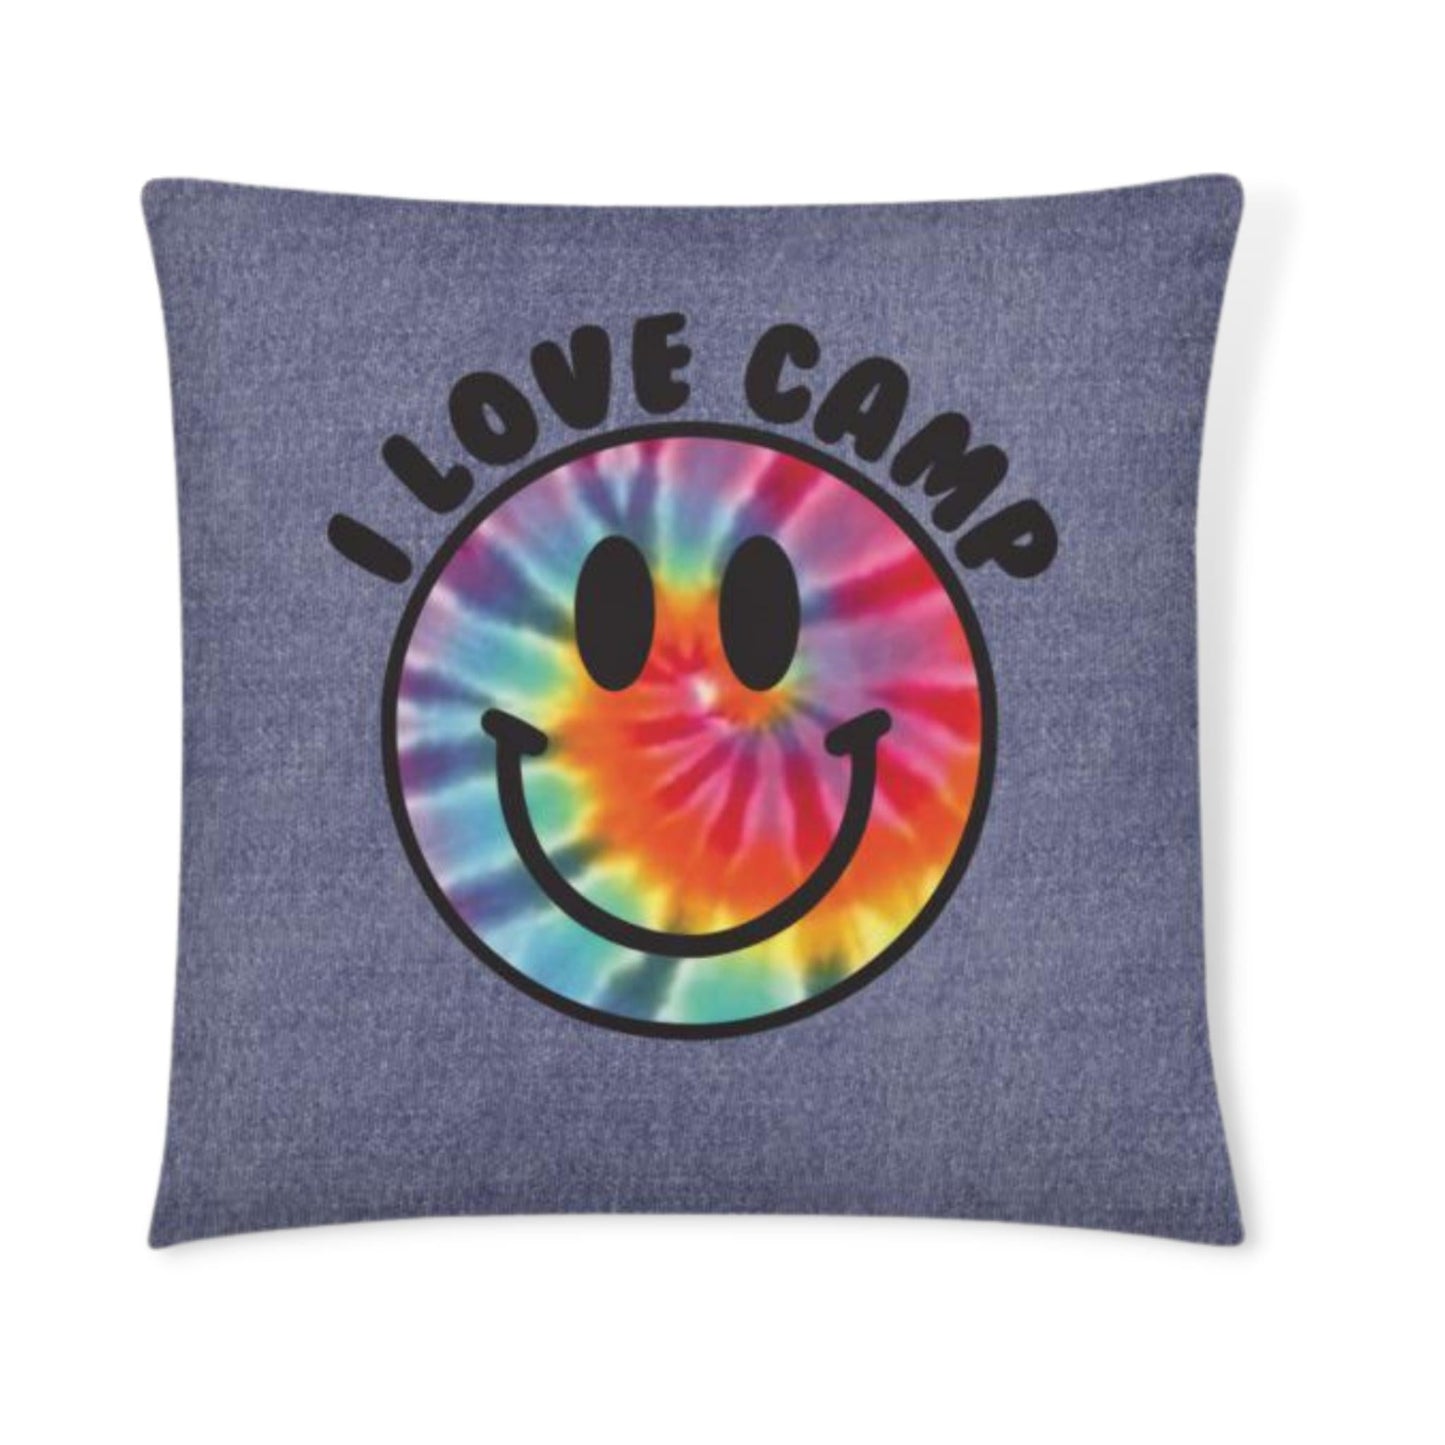 Lockedbylaz Custom Camp Pillows - a Spirit Animal - Custom Camp Pillows $60-$90 accessories Autograph Pillow